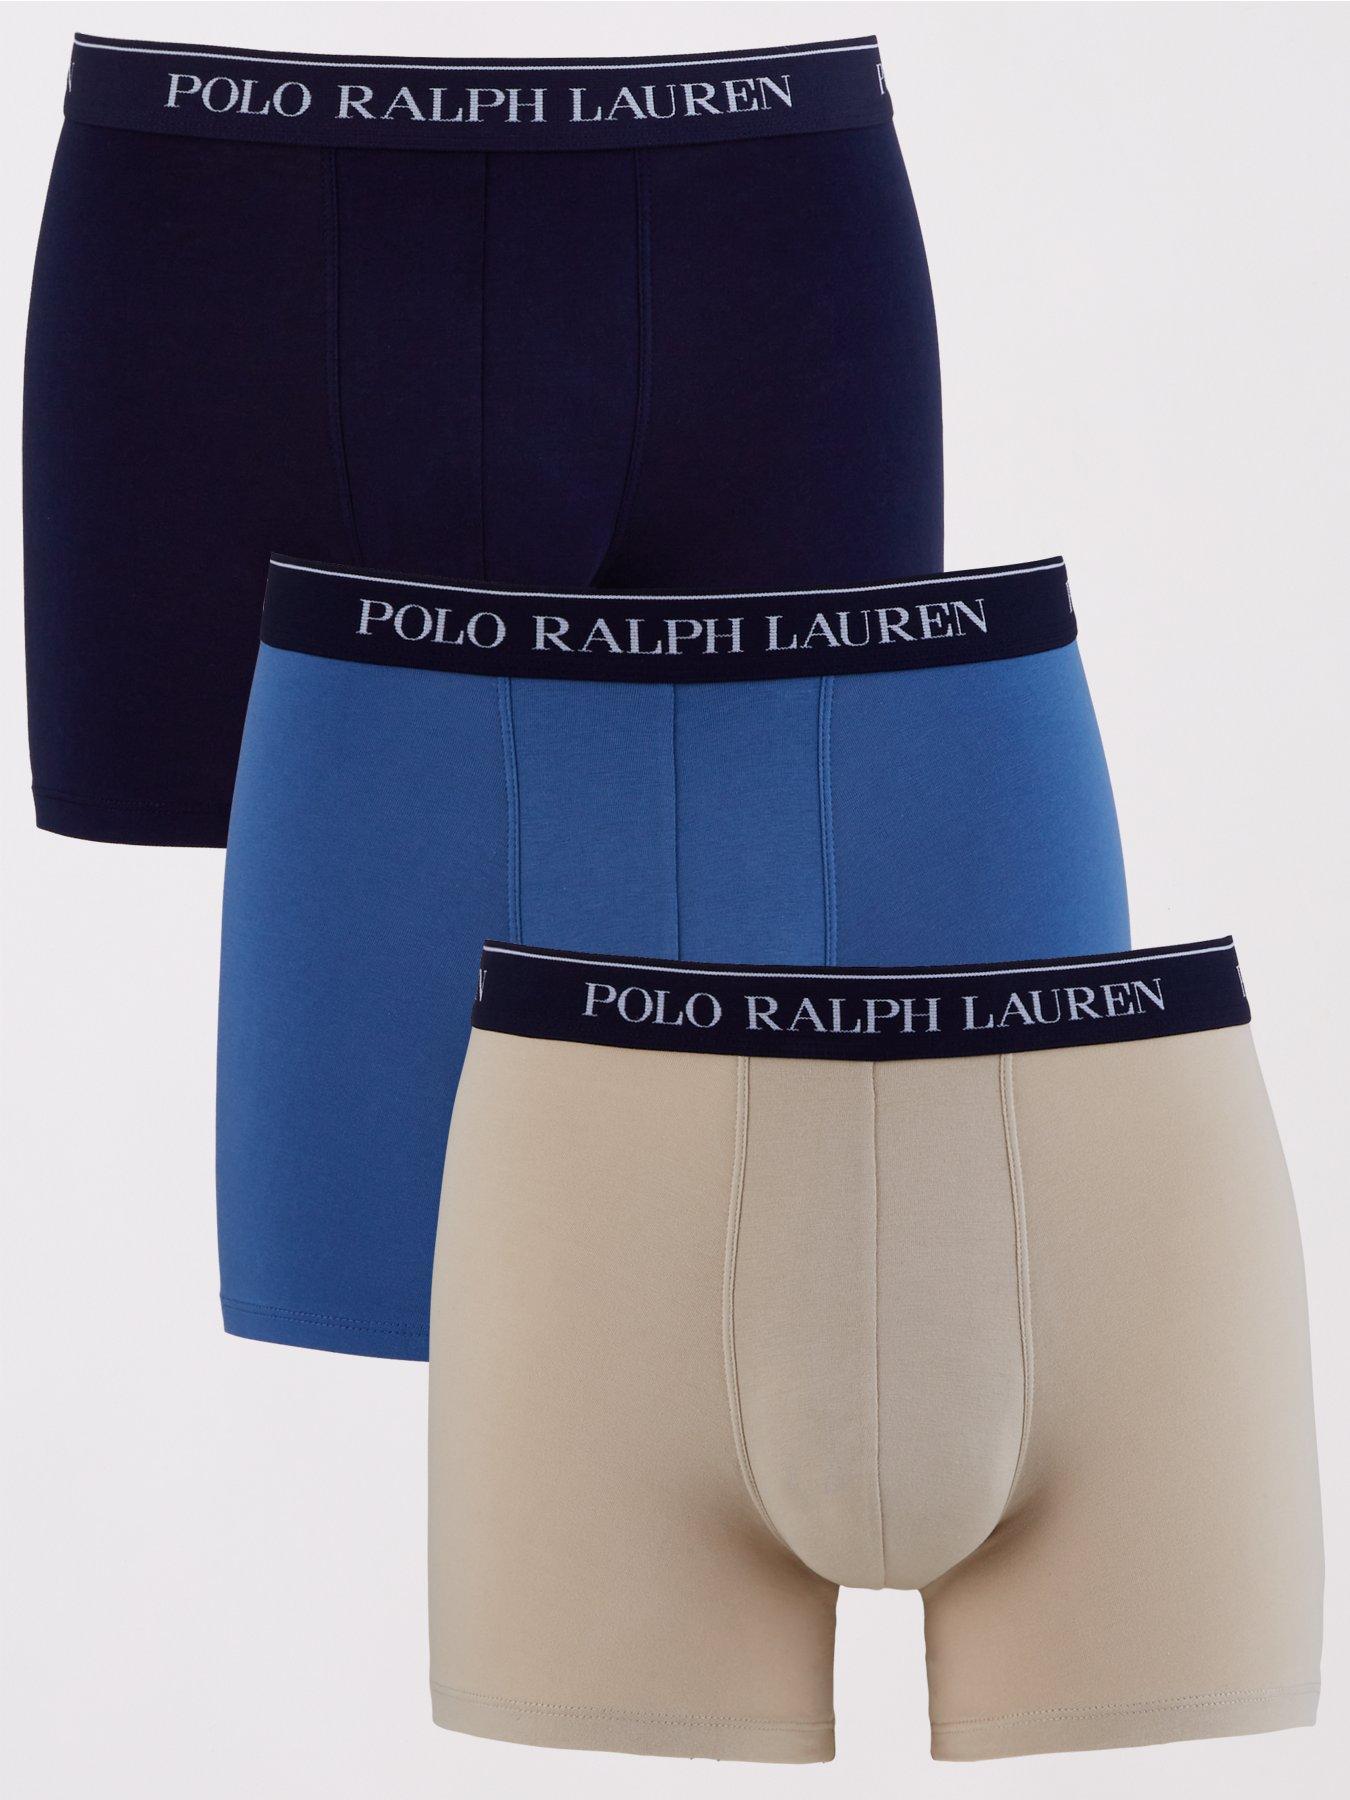 Polo Ralph Lauren 3 Pack Boxer Brief